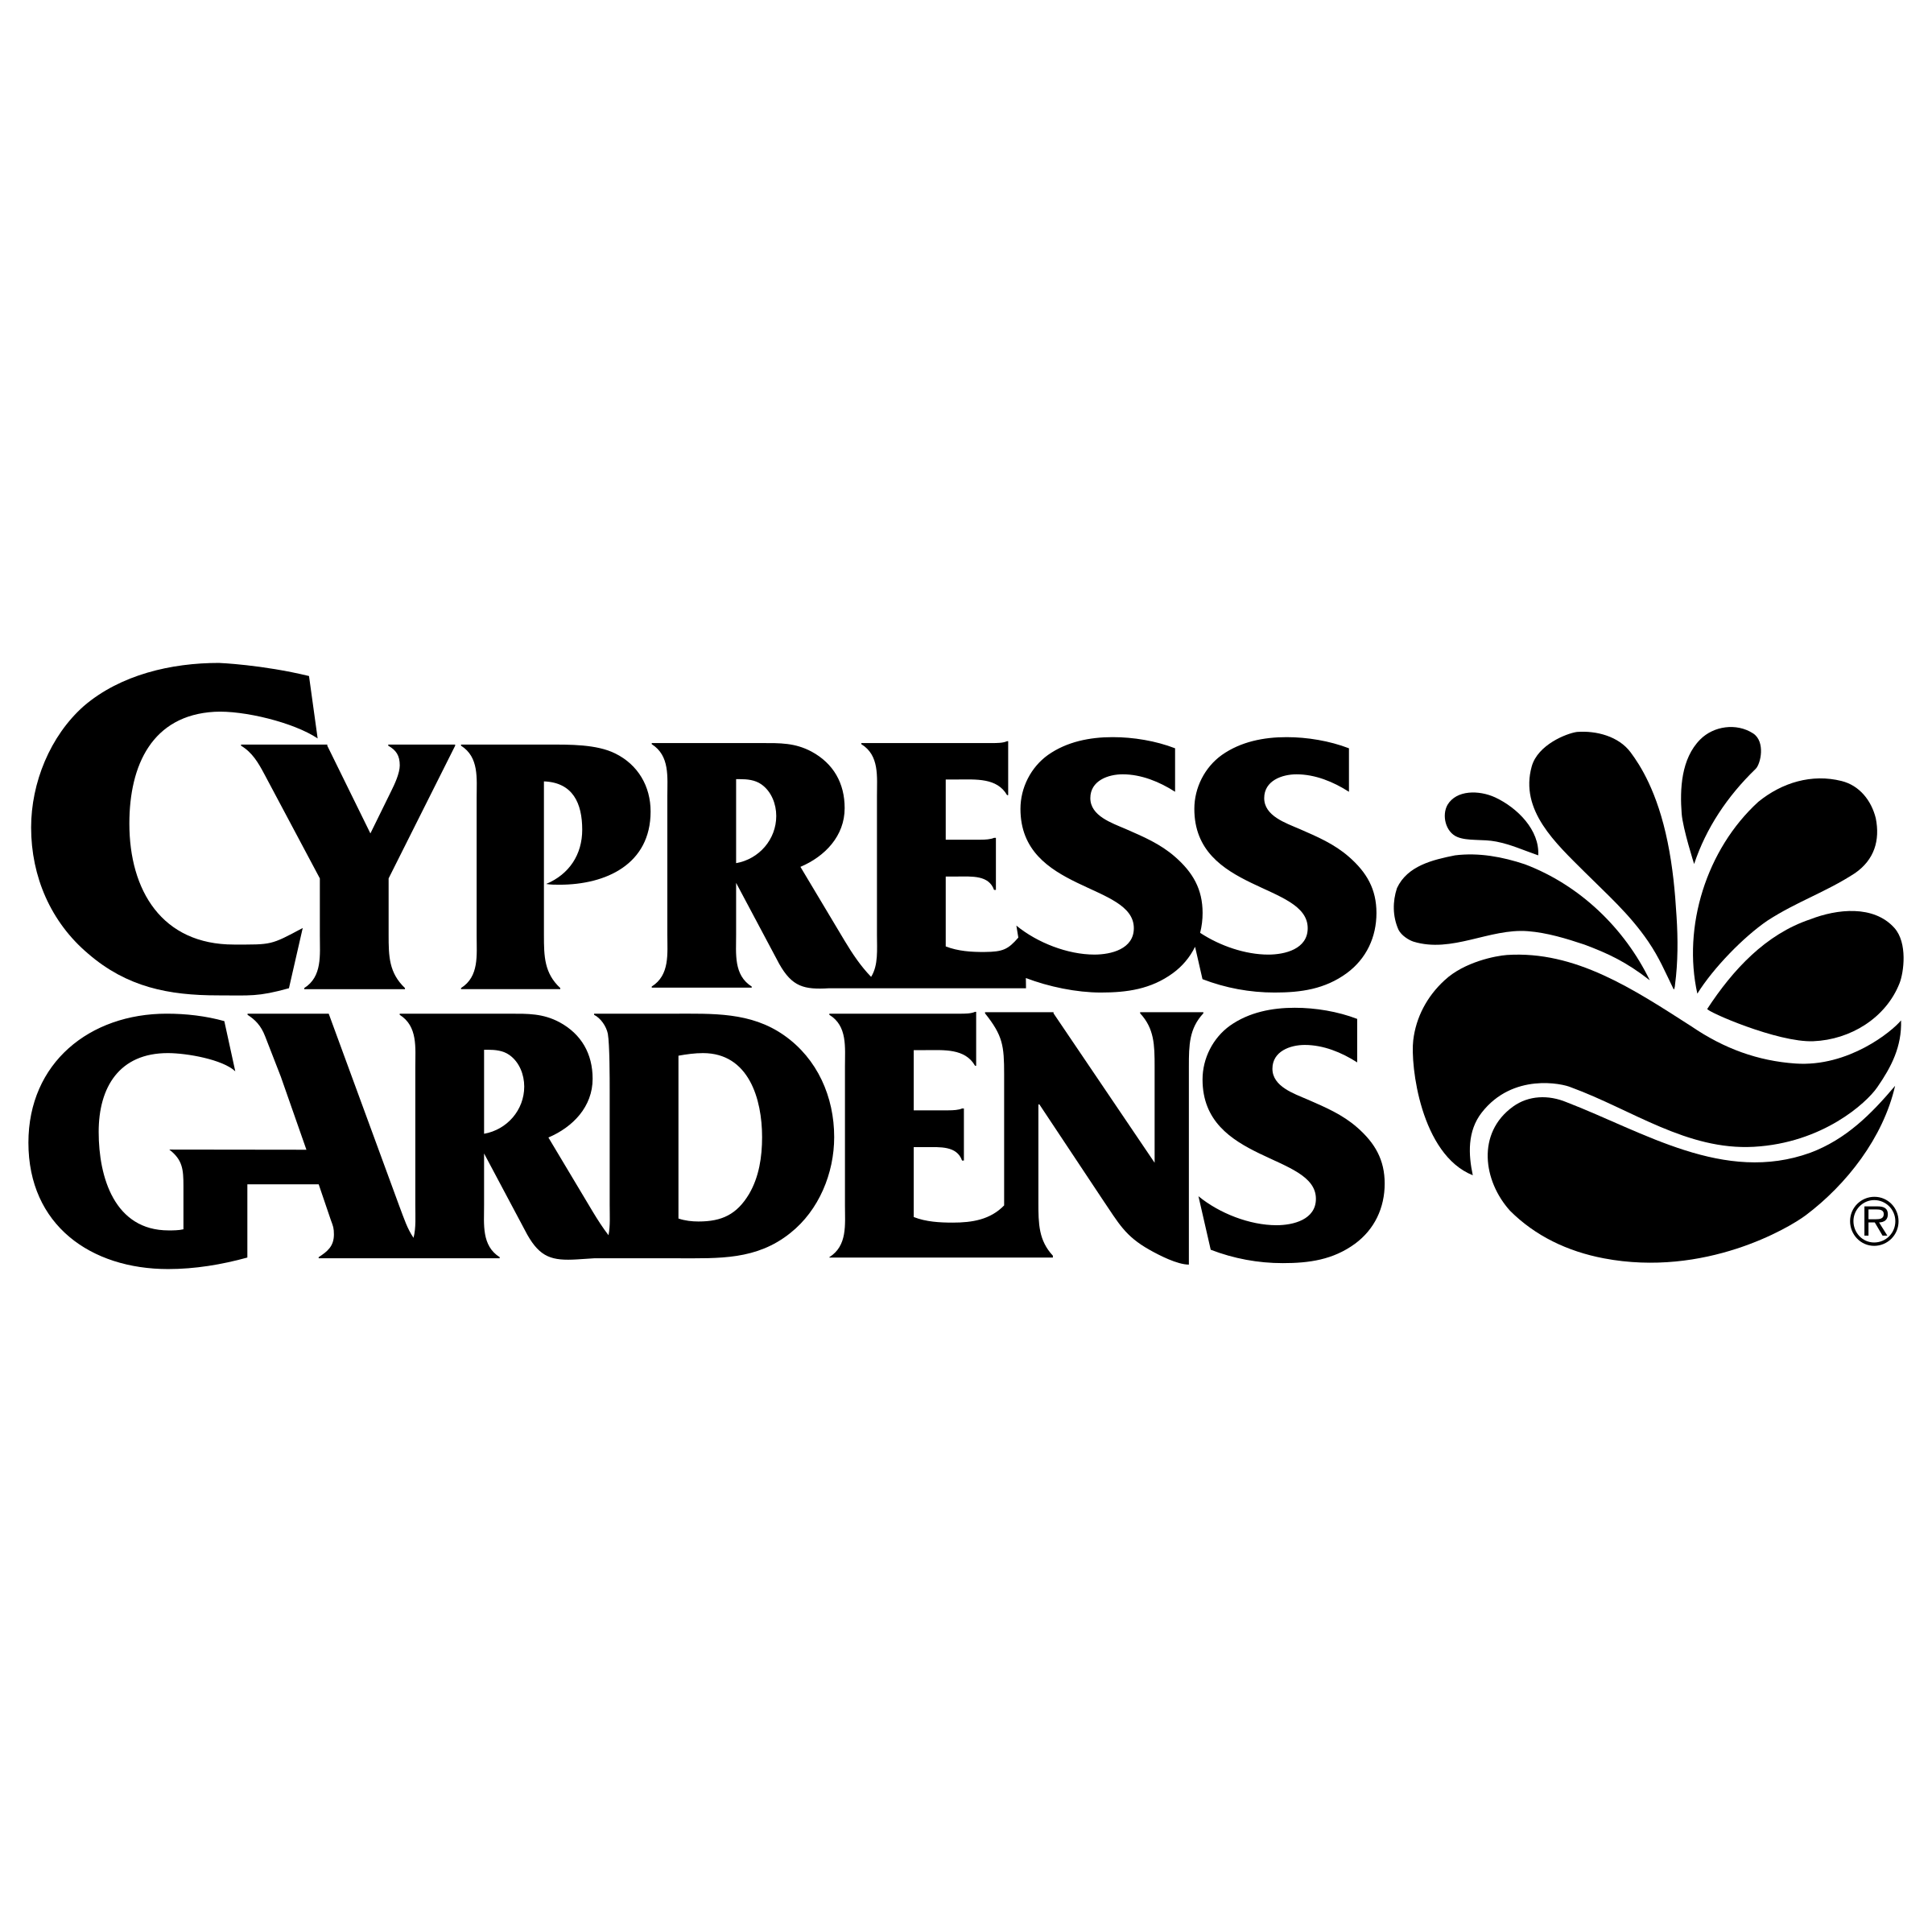 Cypress Logo - Cypress Gardens Logo PNG Transparent & SVG Vector